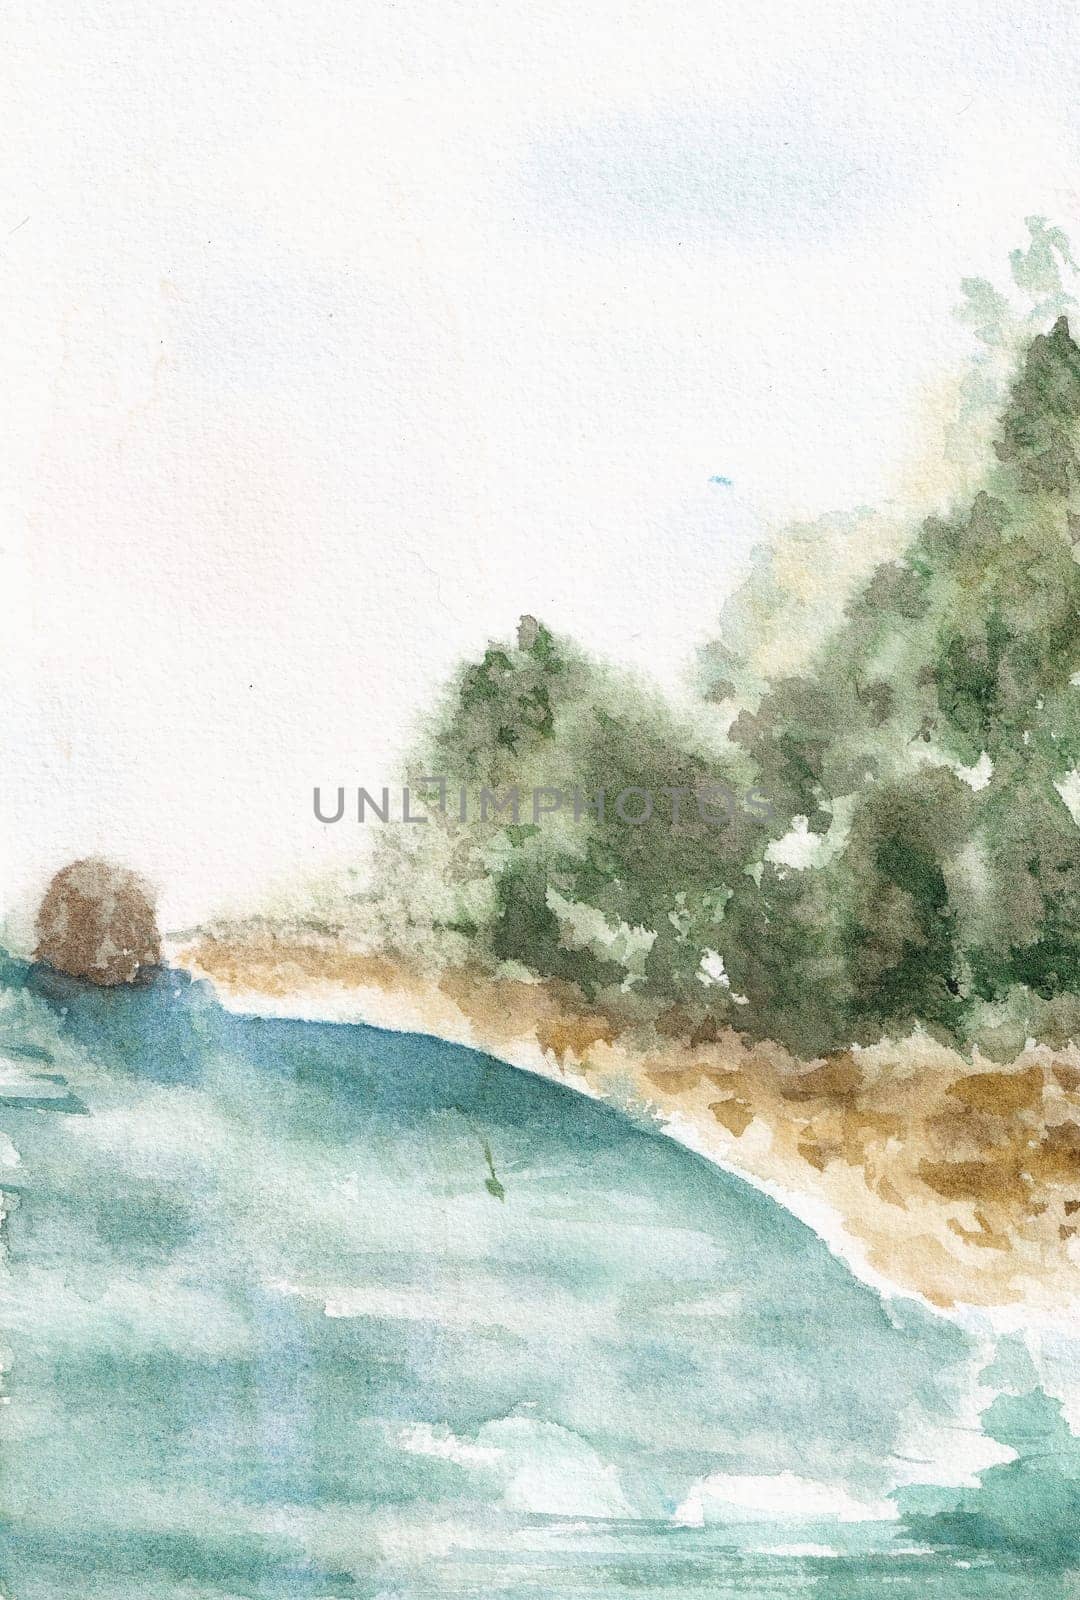 watercolor nature scene with beautiful island and ocean by Desperada